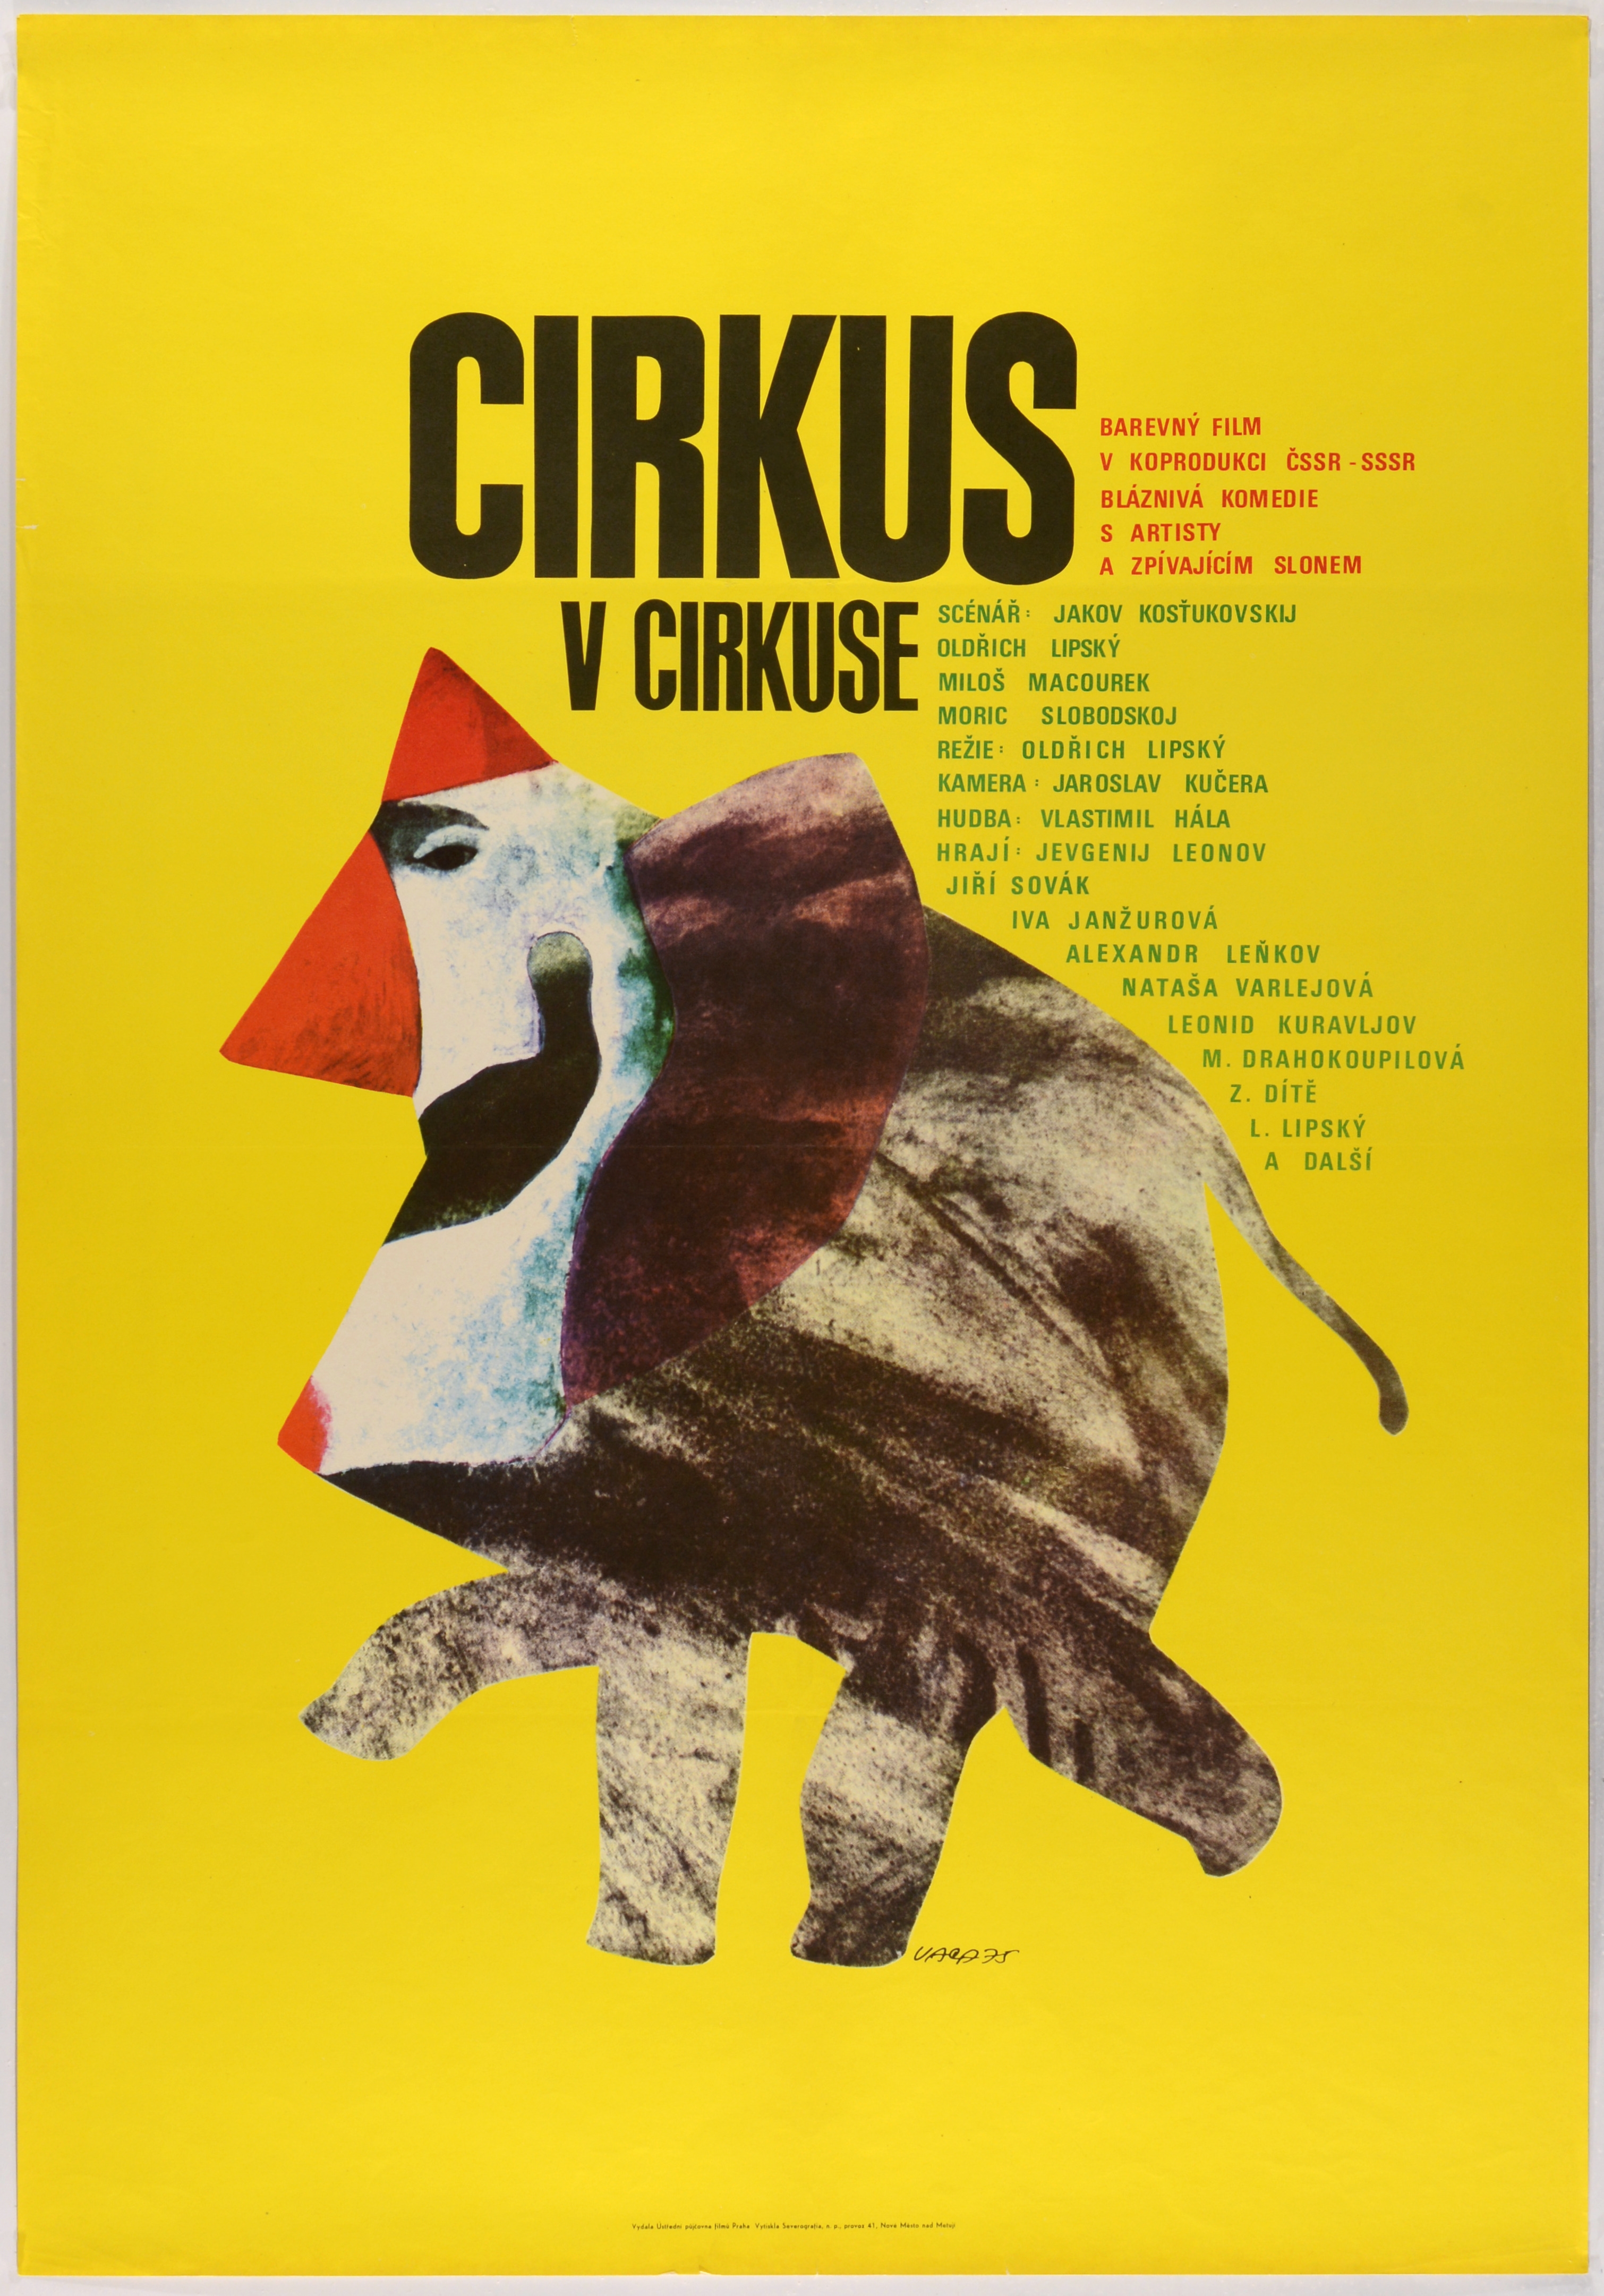 Artwork by Karel Vaca, CIRKUS V CIRKUSE, Made of offset print